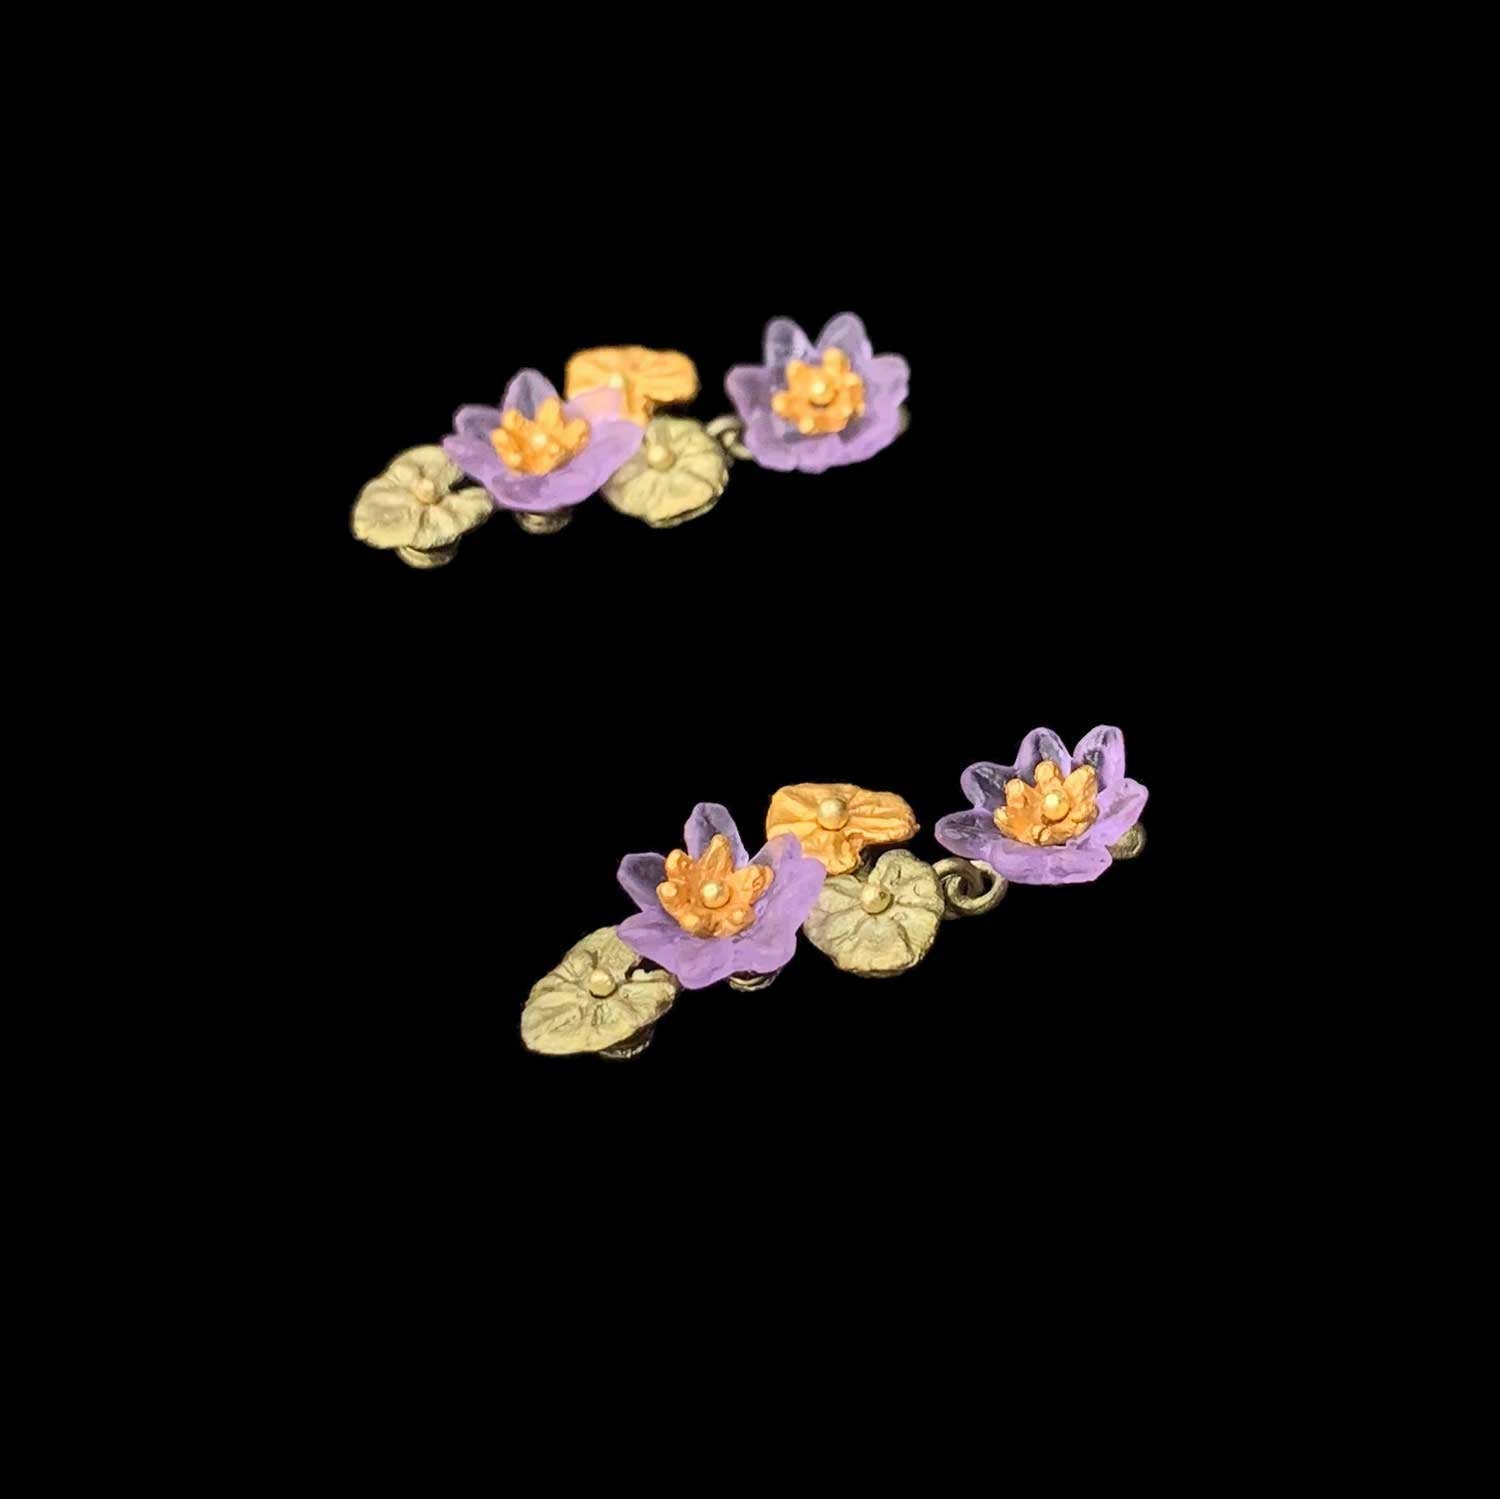 Giverny Water Lilies Earrings - Dangle Post